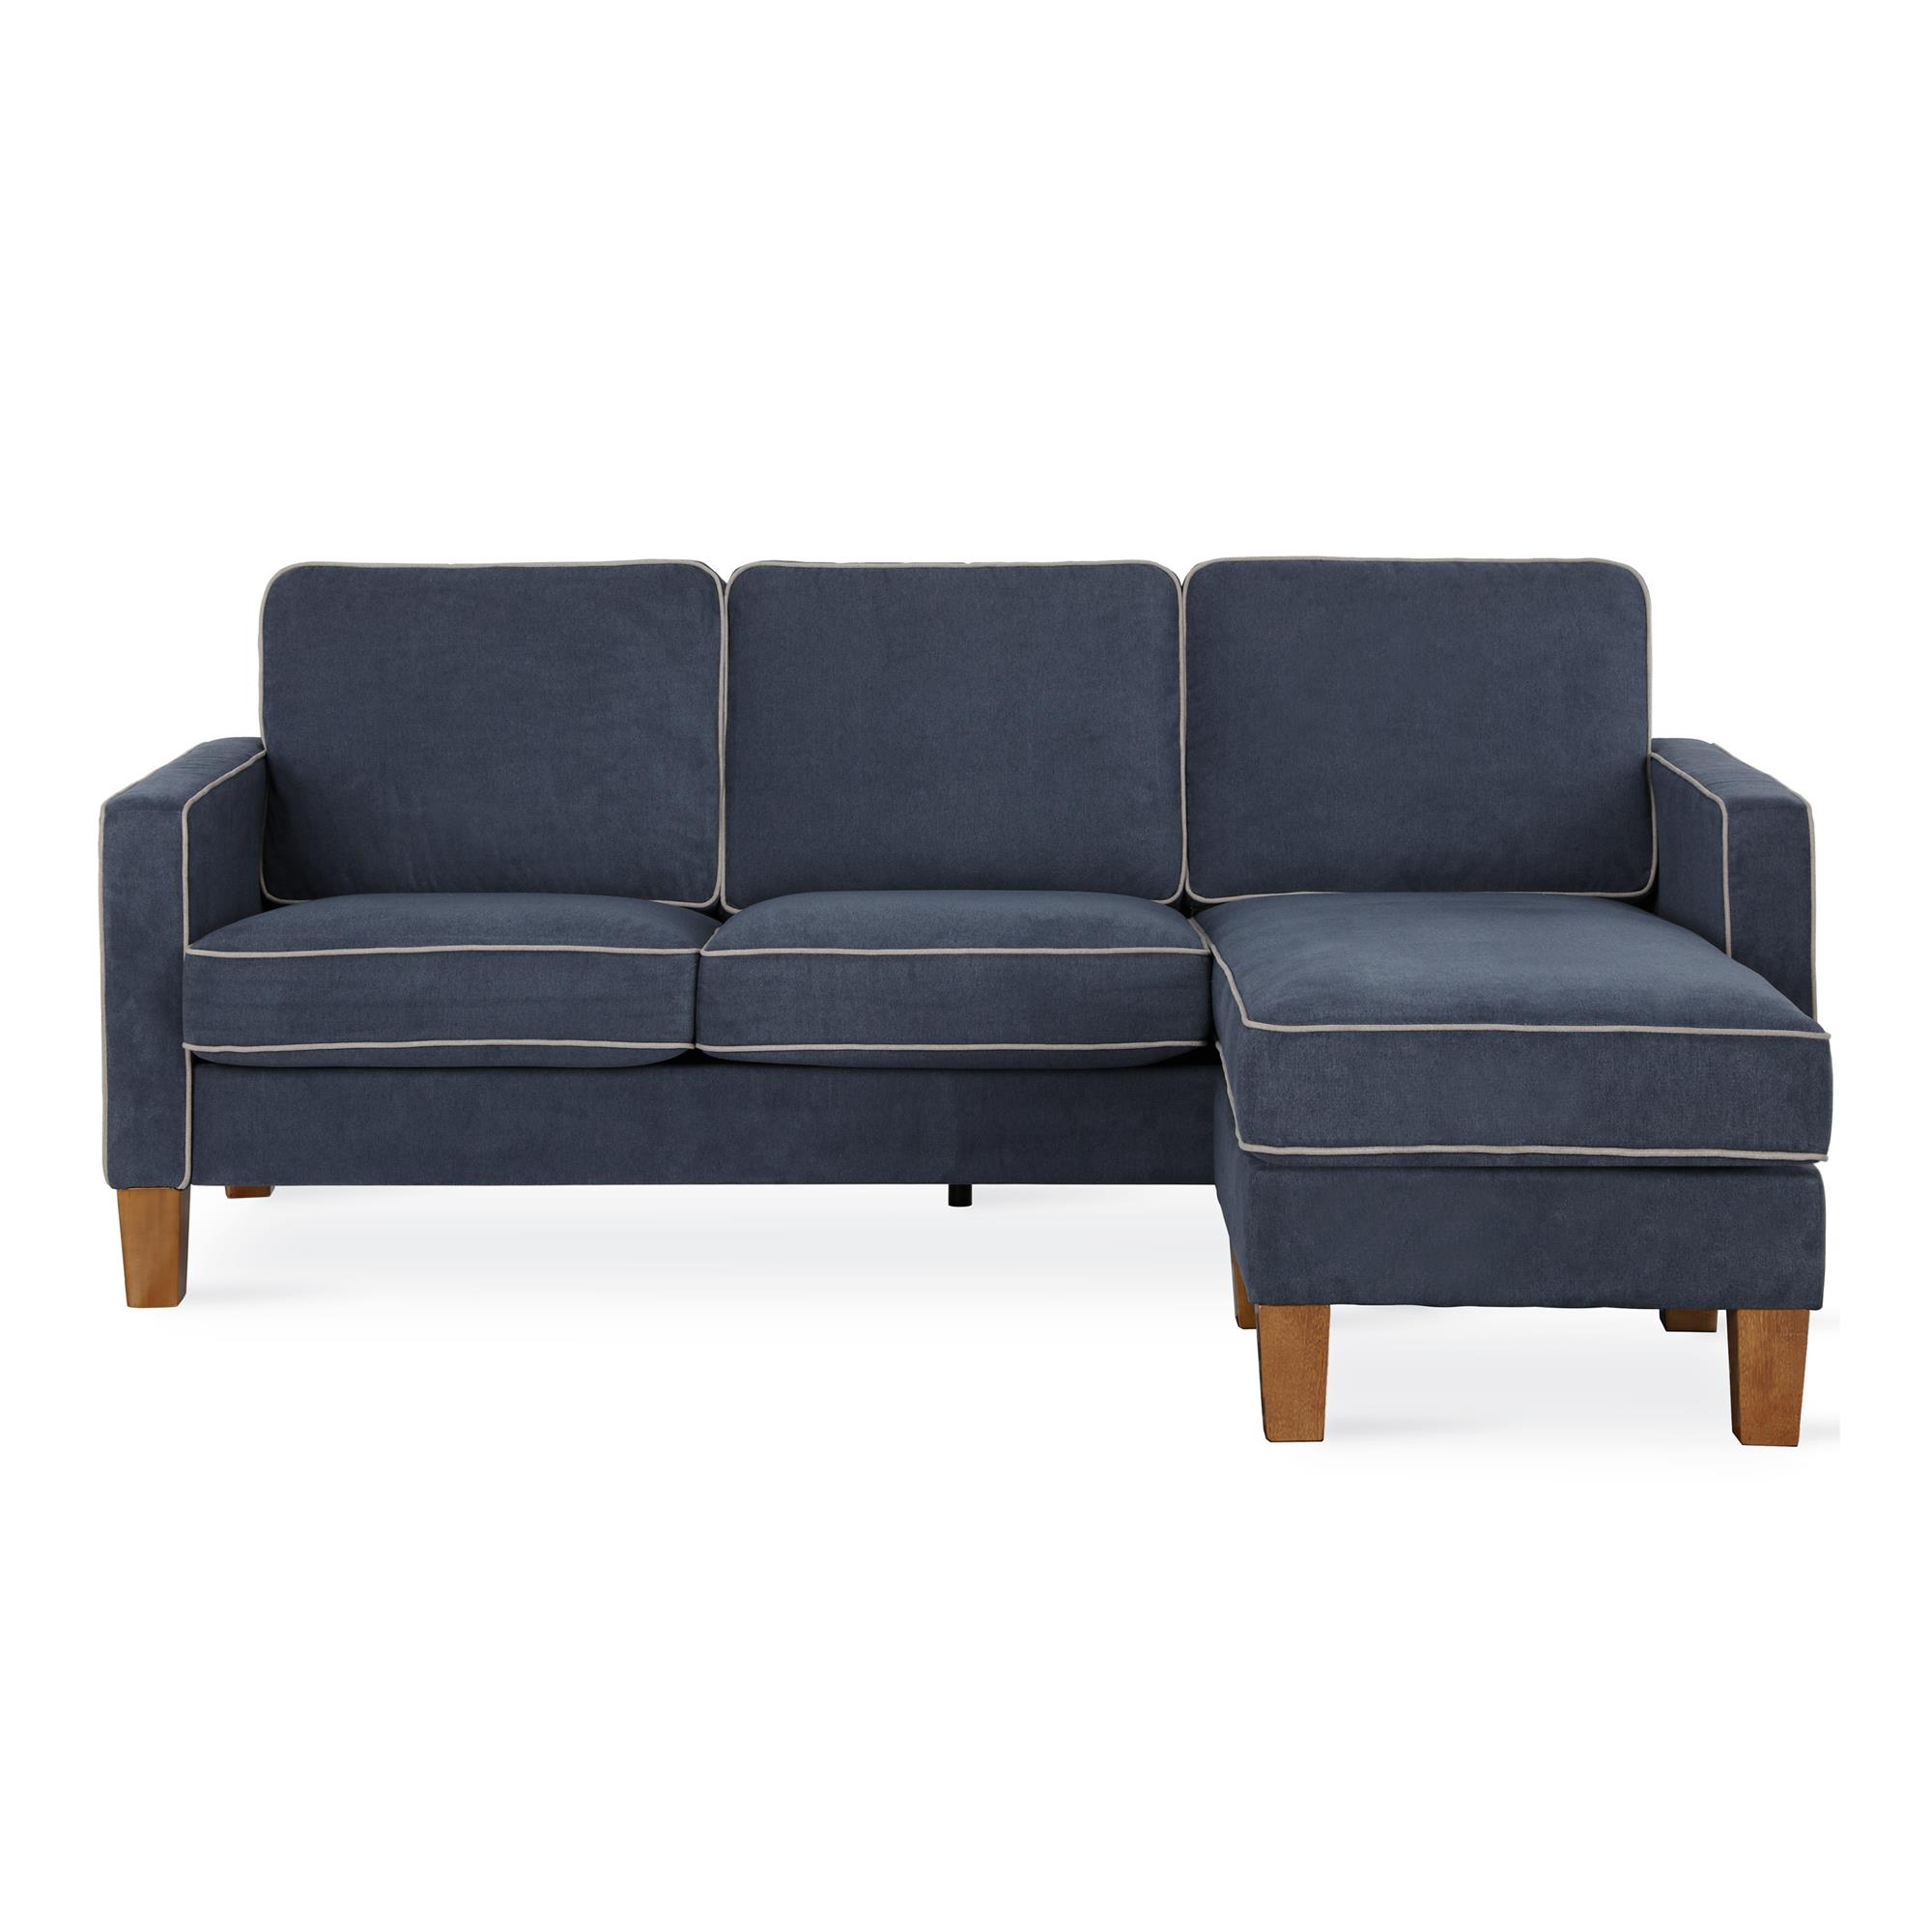 Novogratz Bowen Sectional Sofa with Contrast Welting, Blue, (Blue) - image 2 of 10